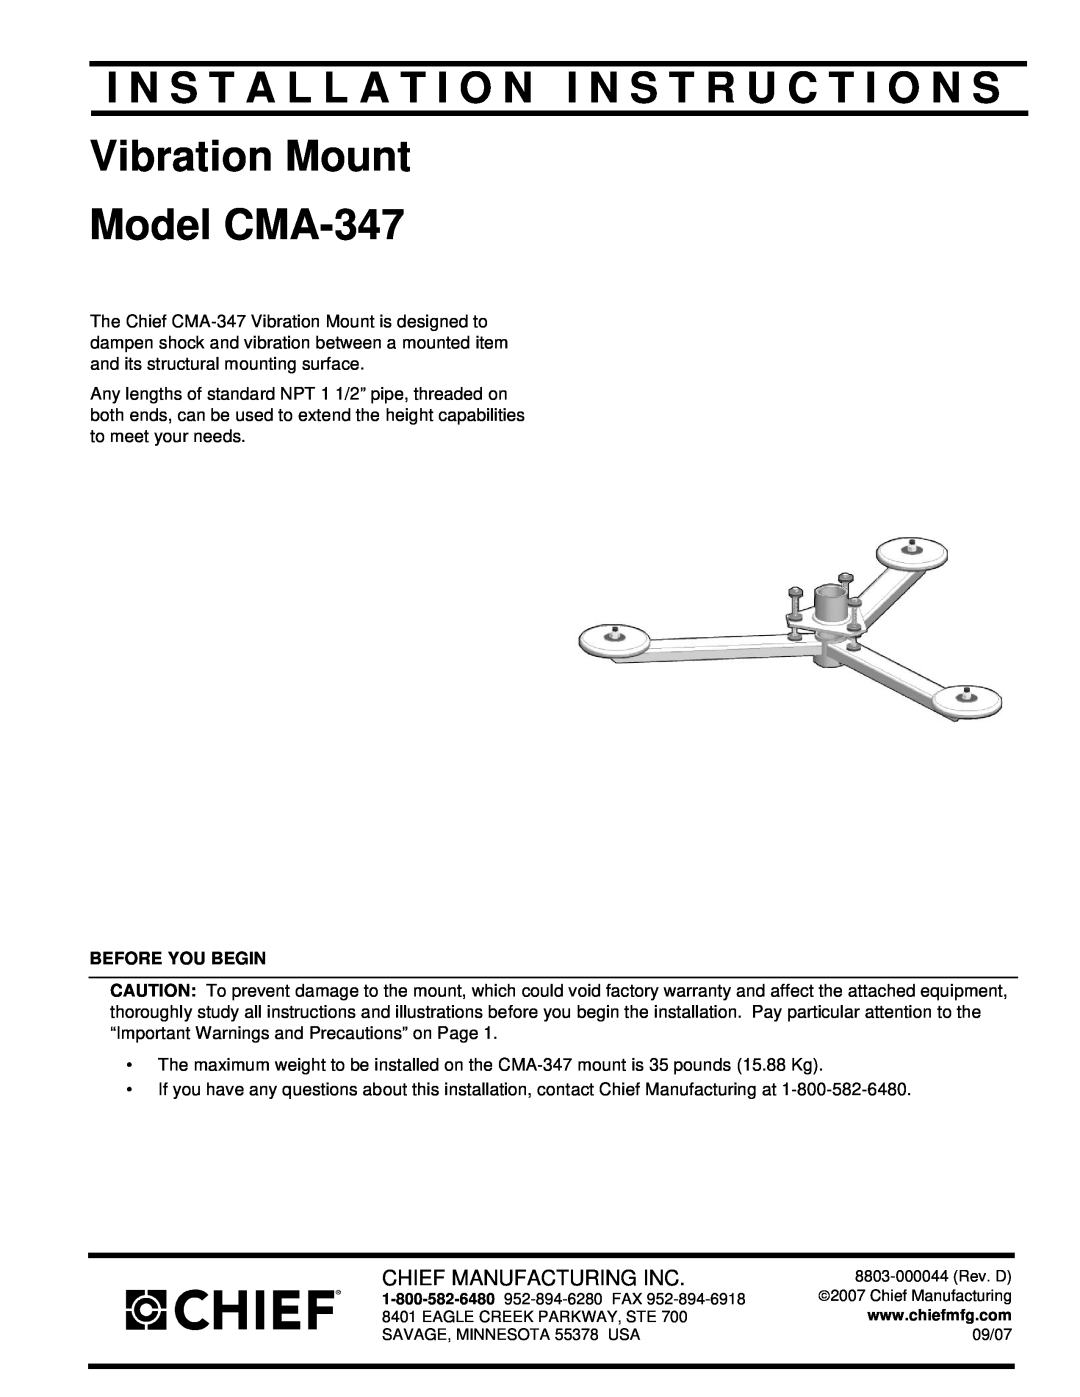 Chief Manufacturing CMA-347 installation instructions Chief Manufacturing Inc, Before You Begin 